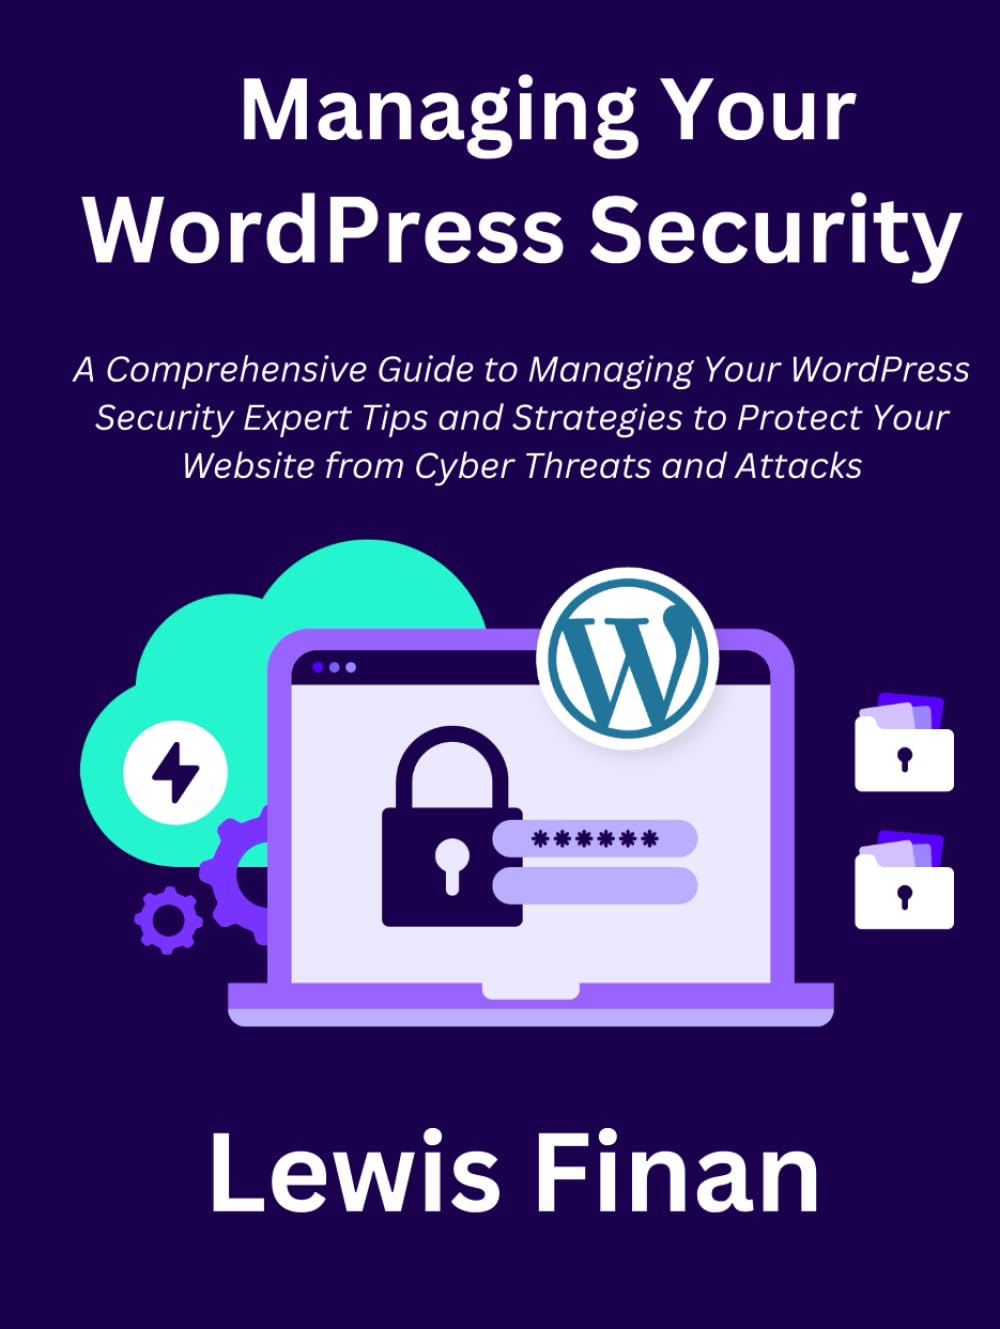 WordPress Security Guide